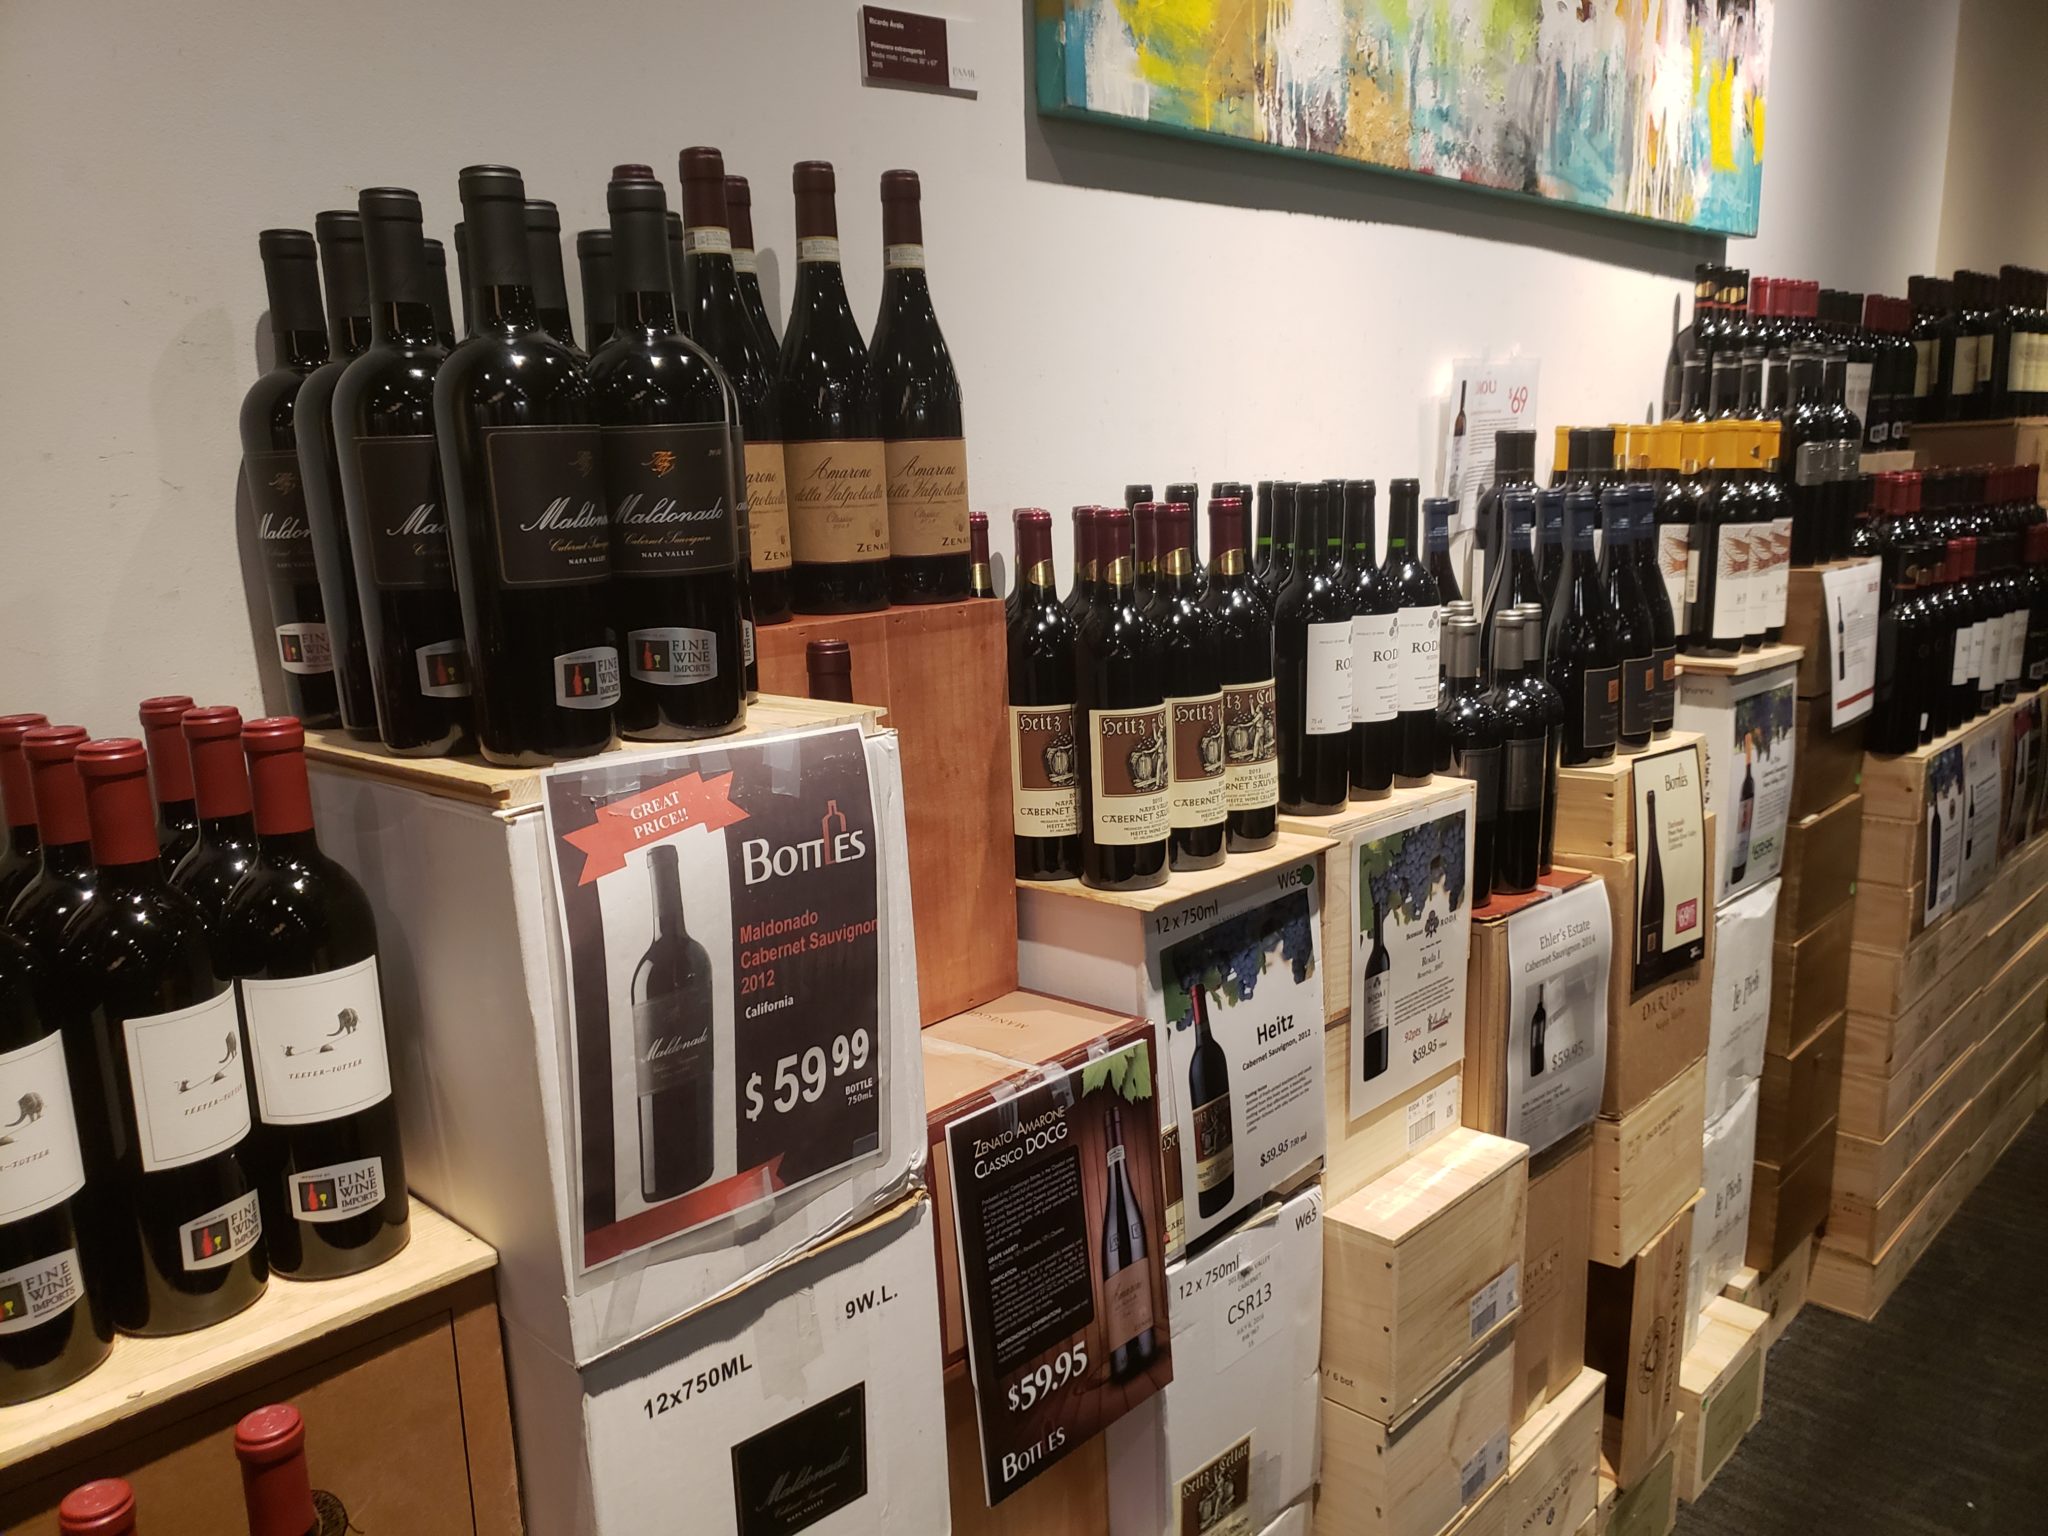 a display of wine bottles